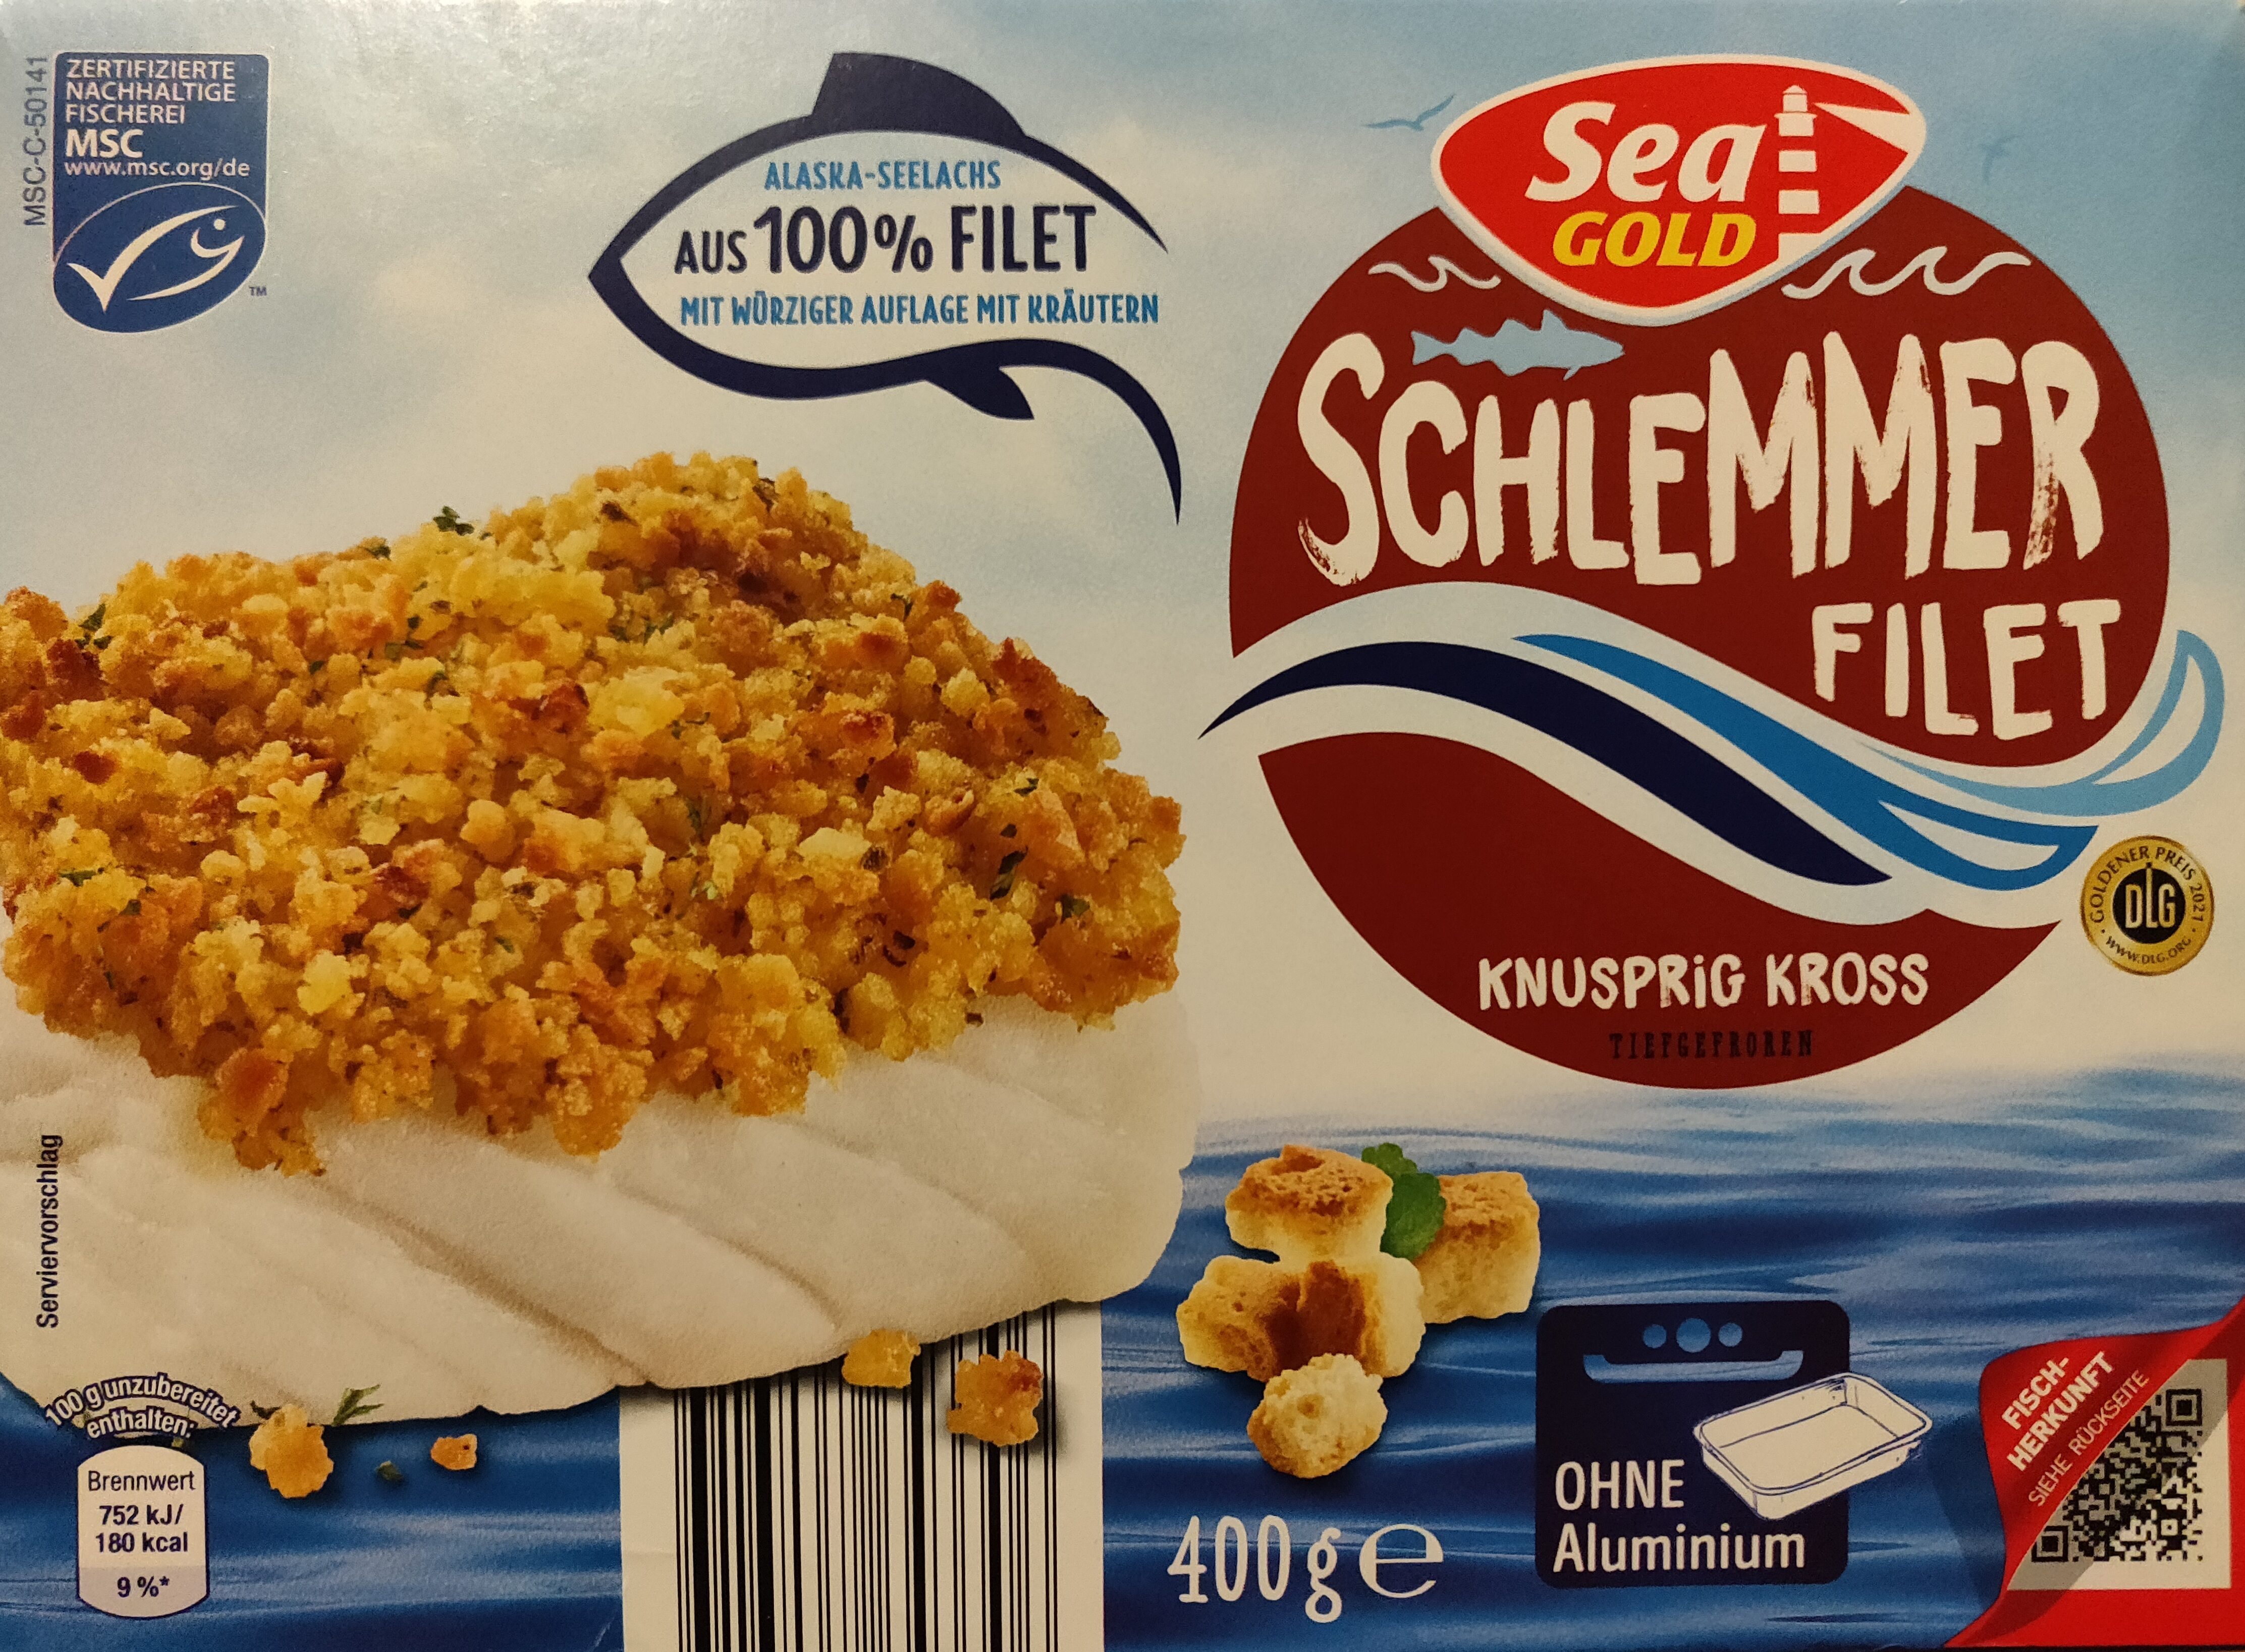 Schlemmer Filet knusprig kross - Produkt